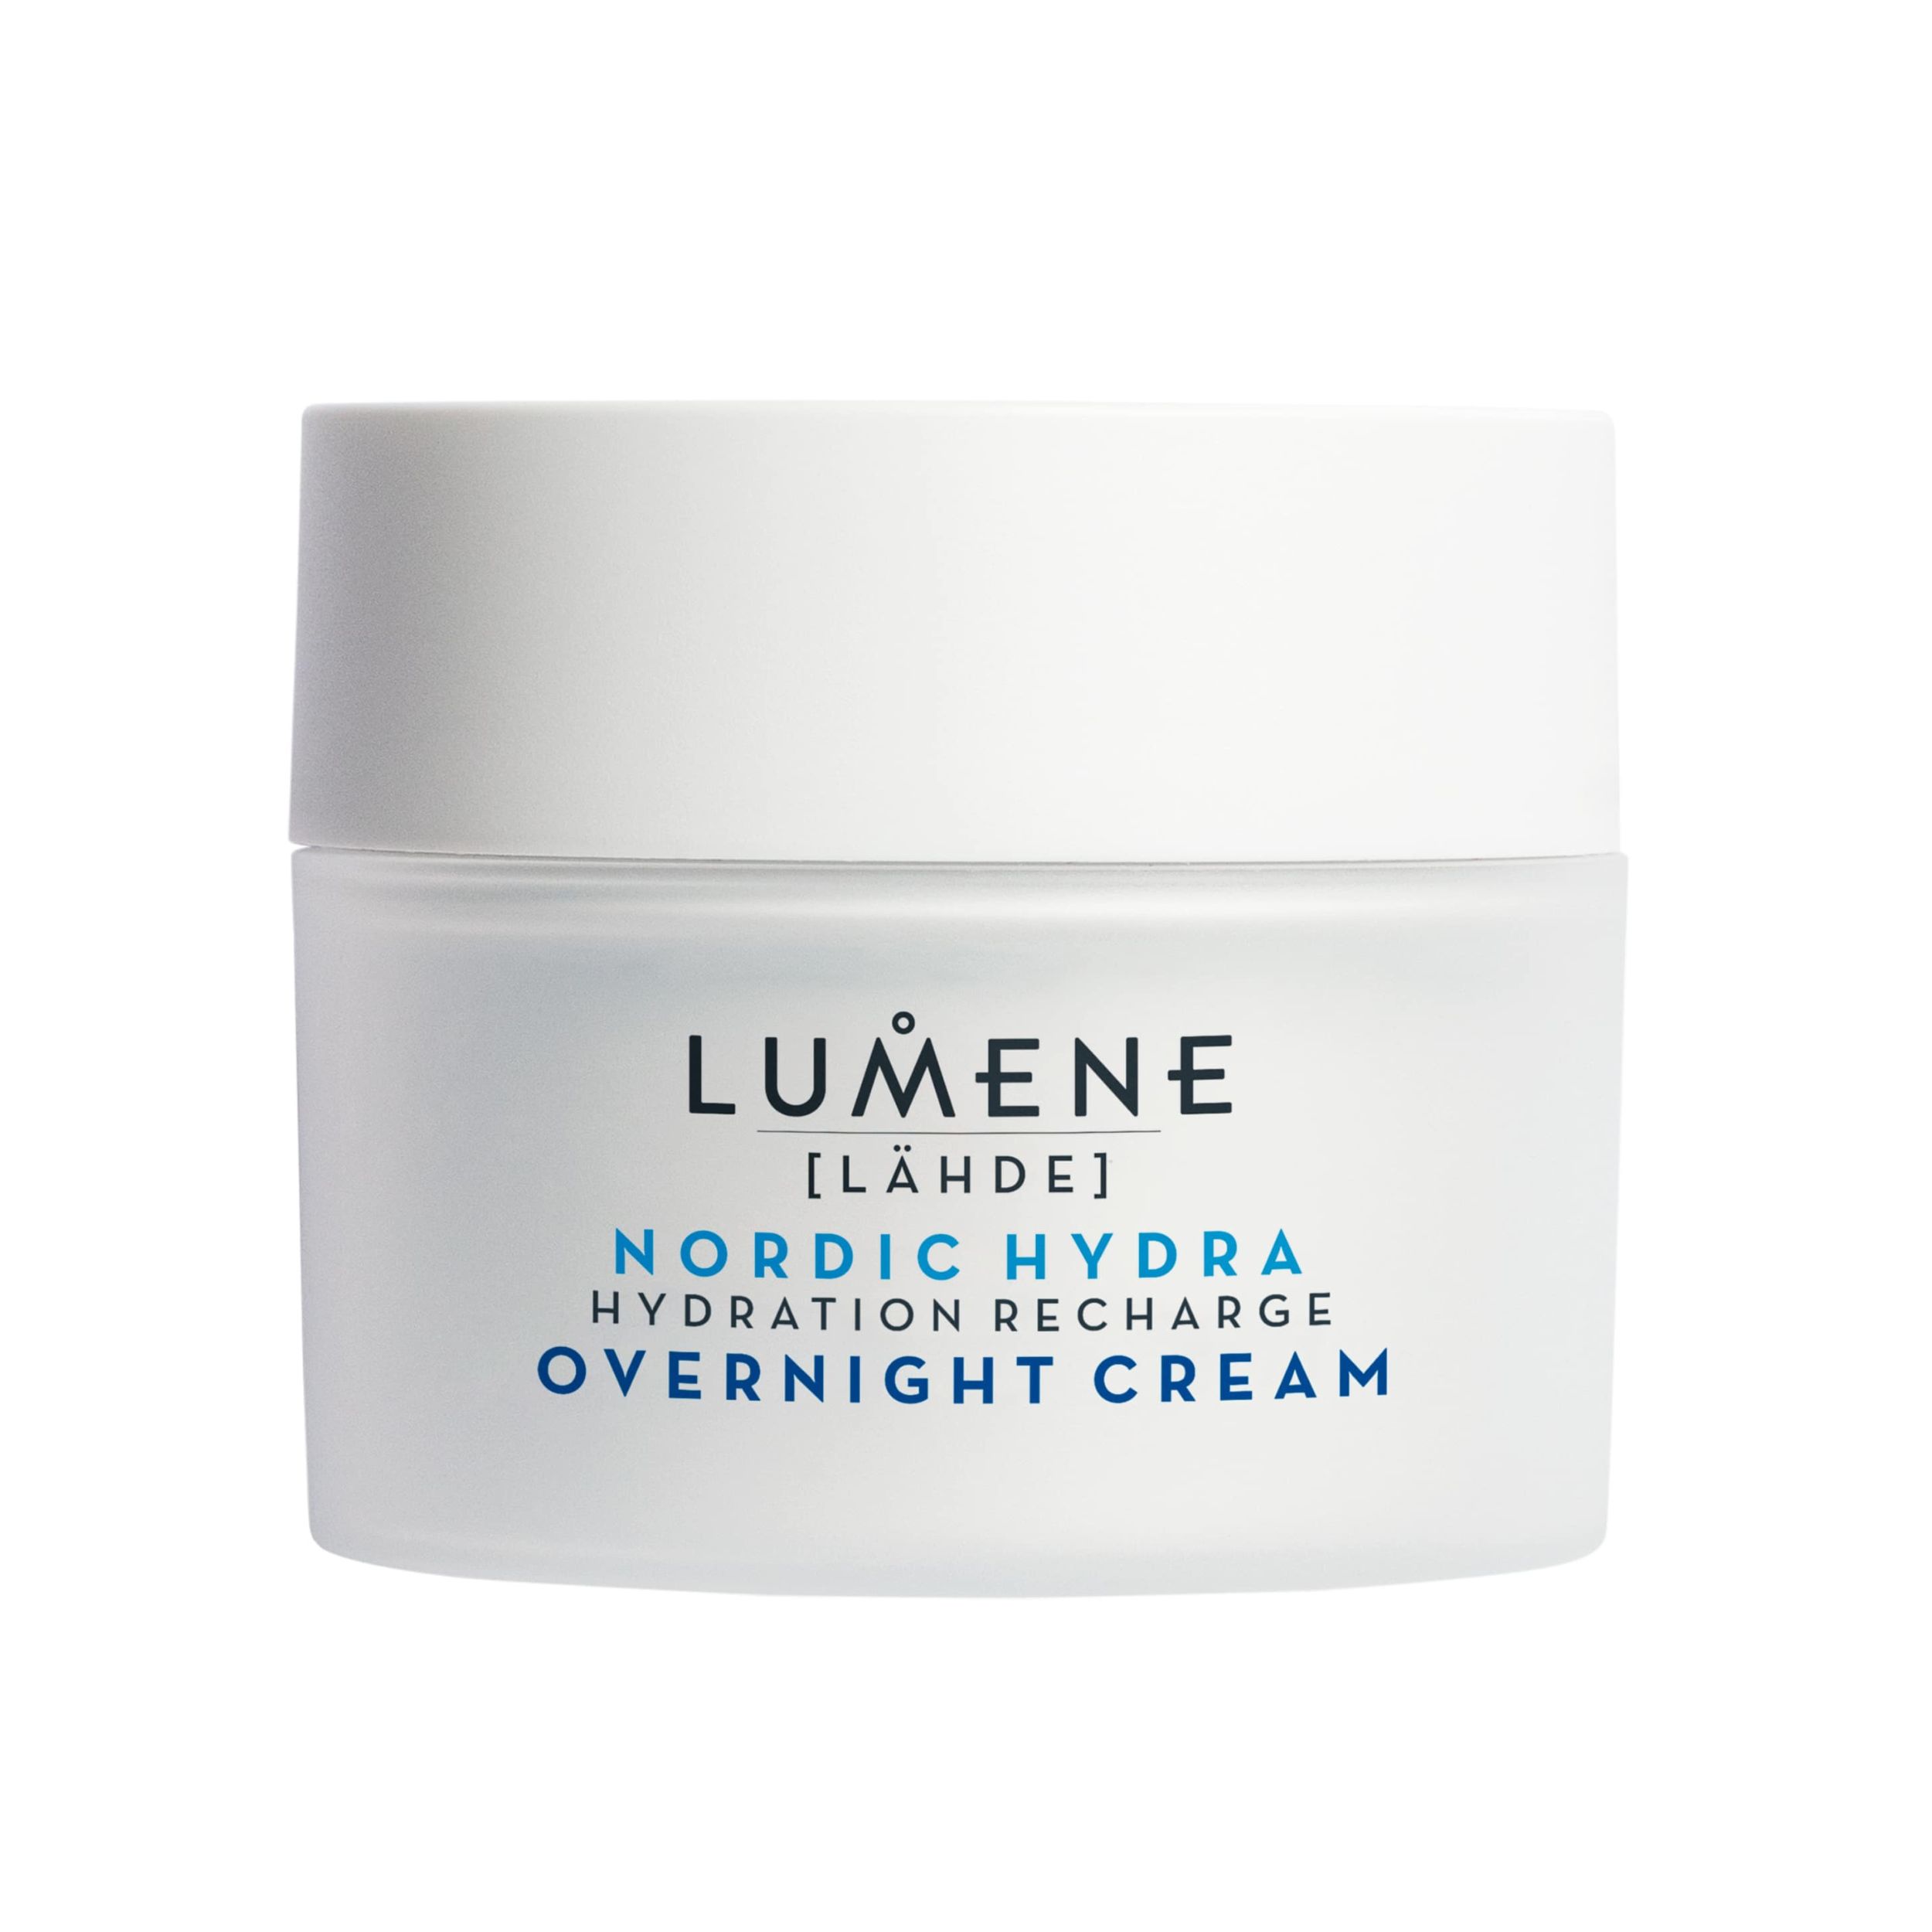 Lumene Nordic Hydra Hydration Recharge Overnight Cream, 50 ml